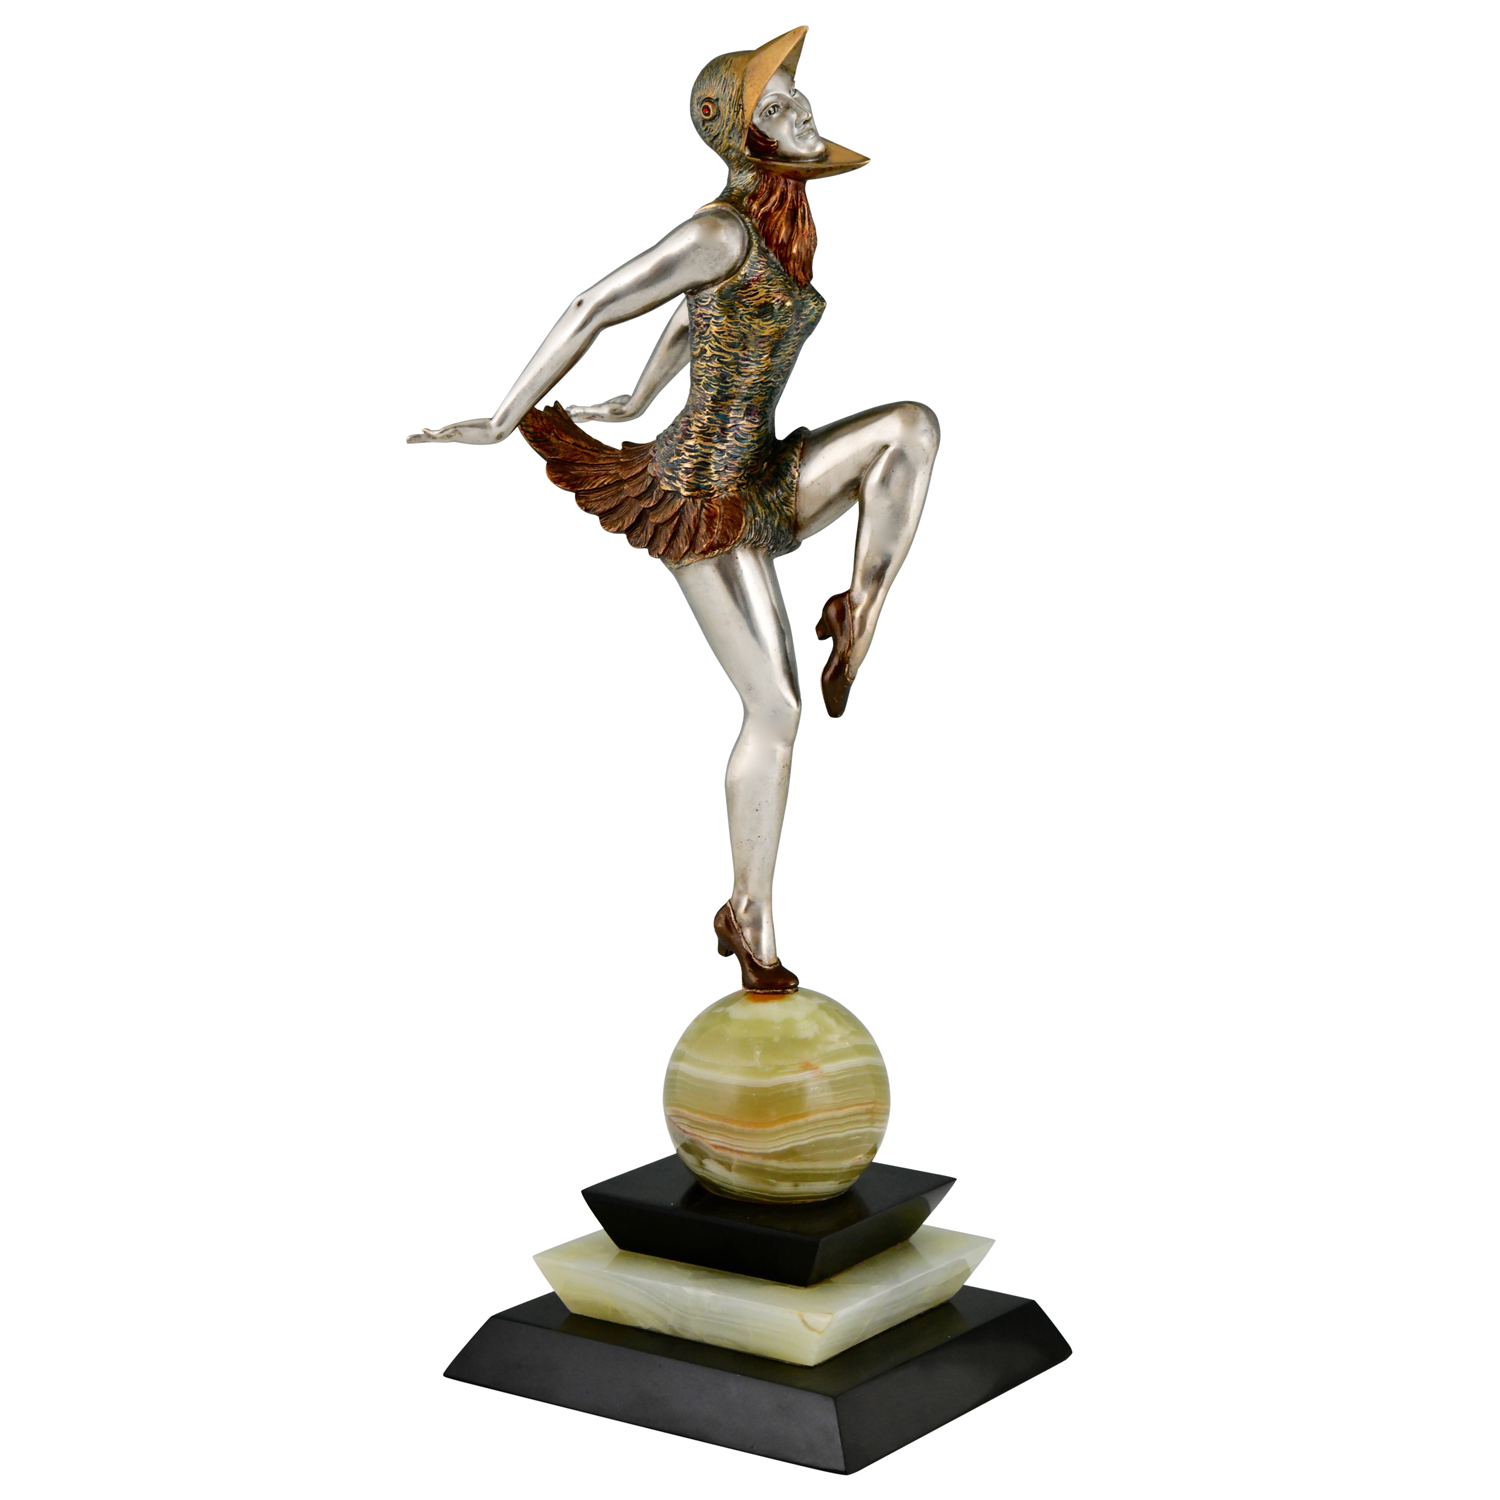 Molins Art Deco bronze dancer